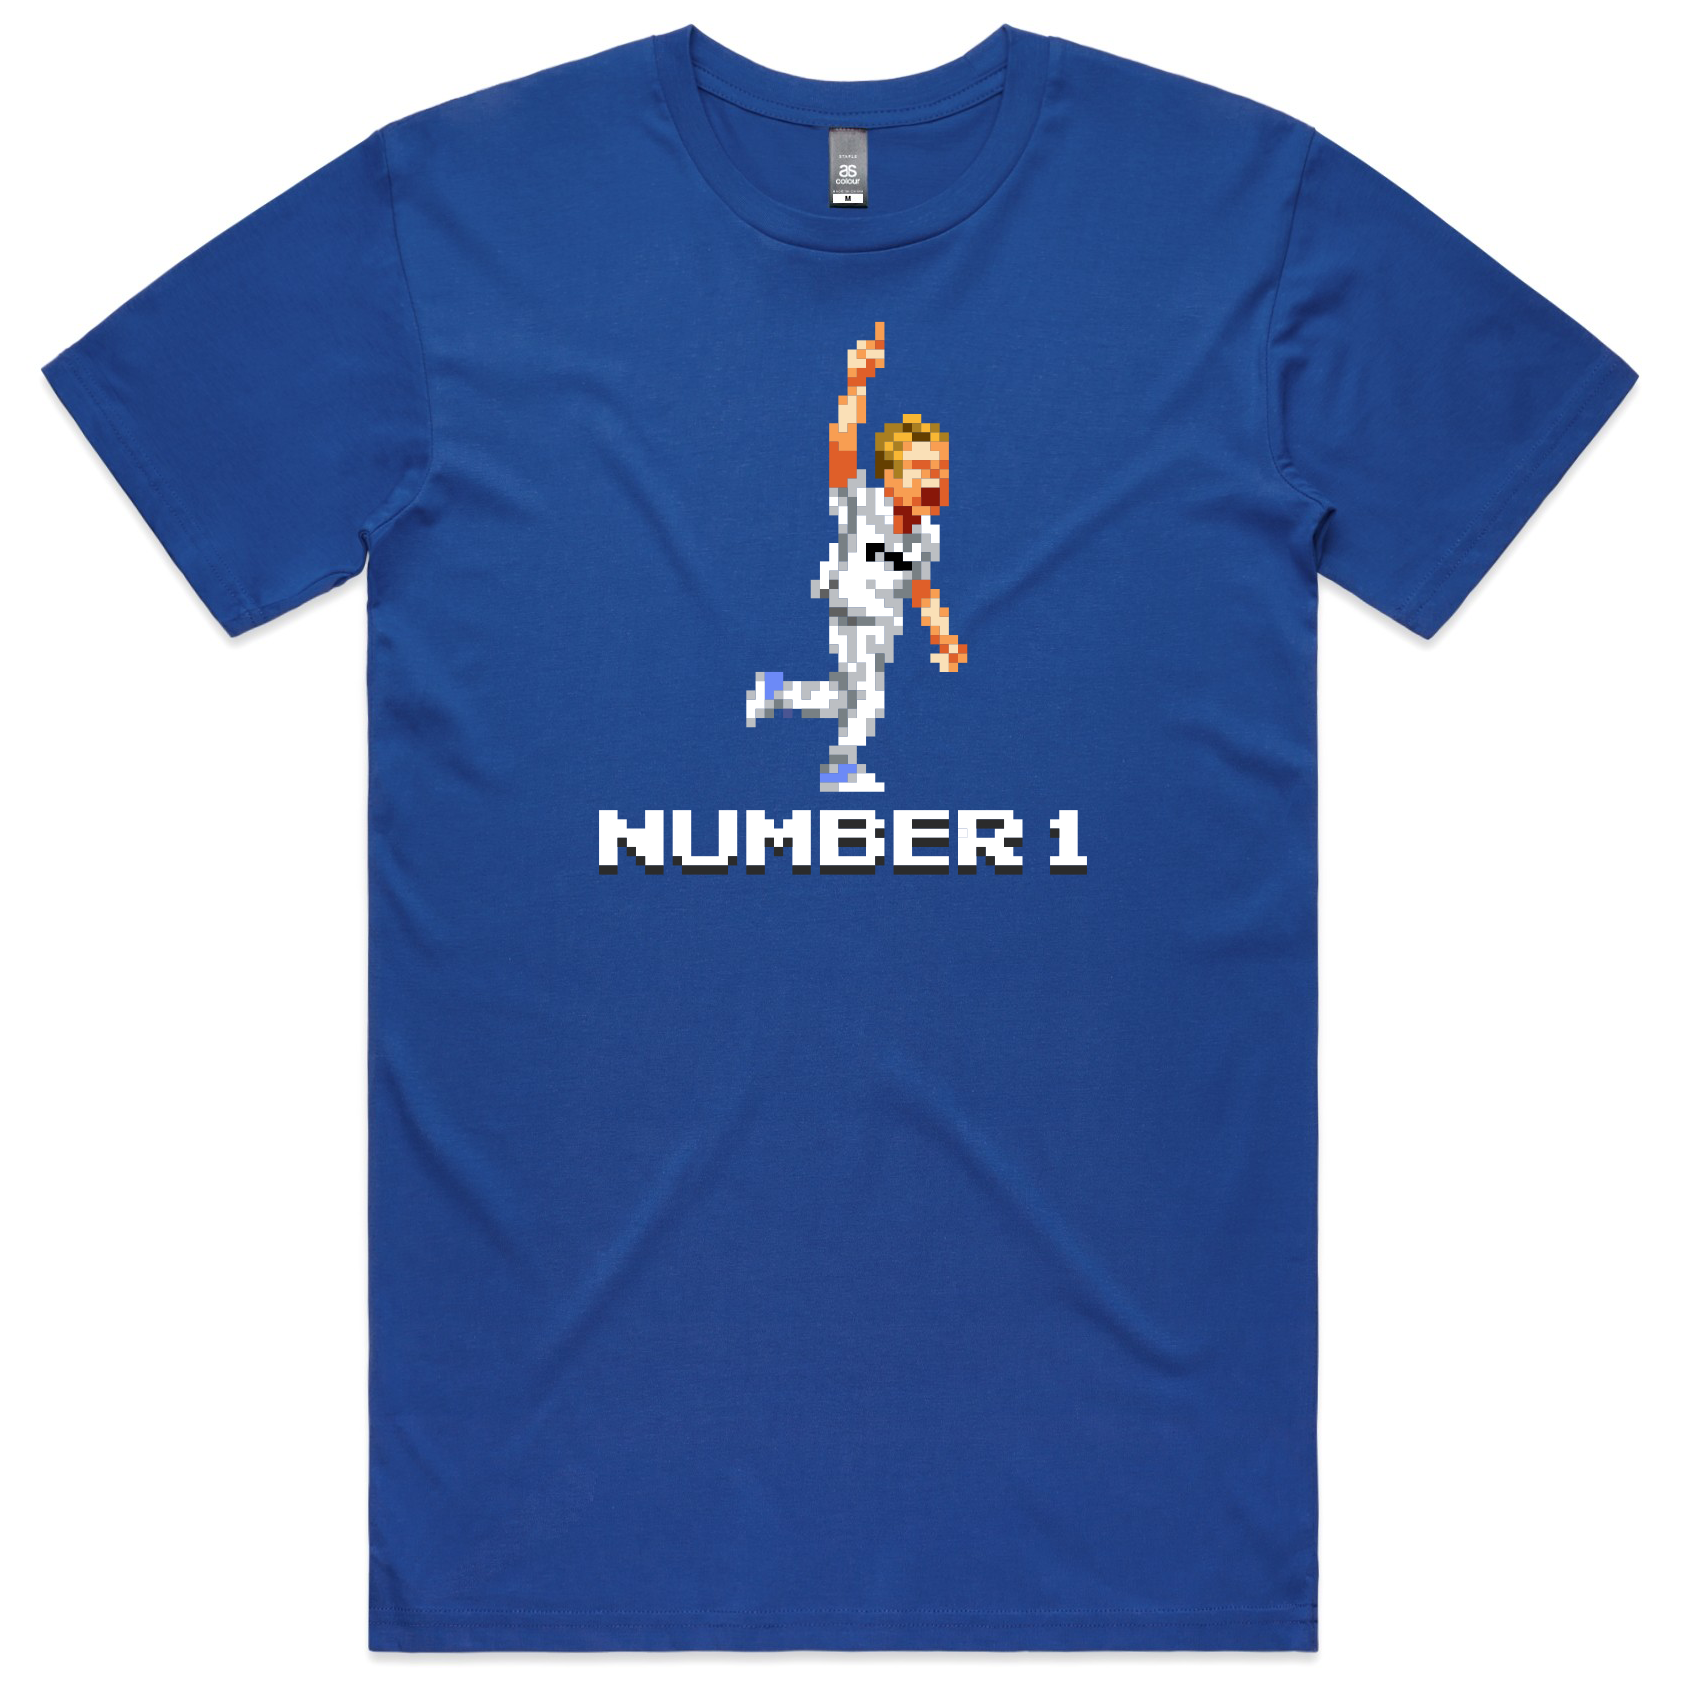 Number 1 cricket blue t-shirt mens